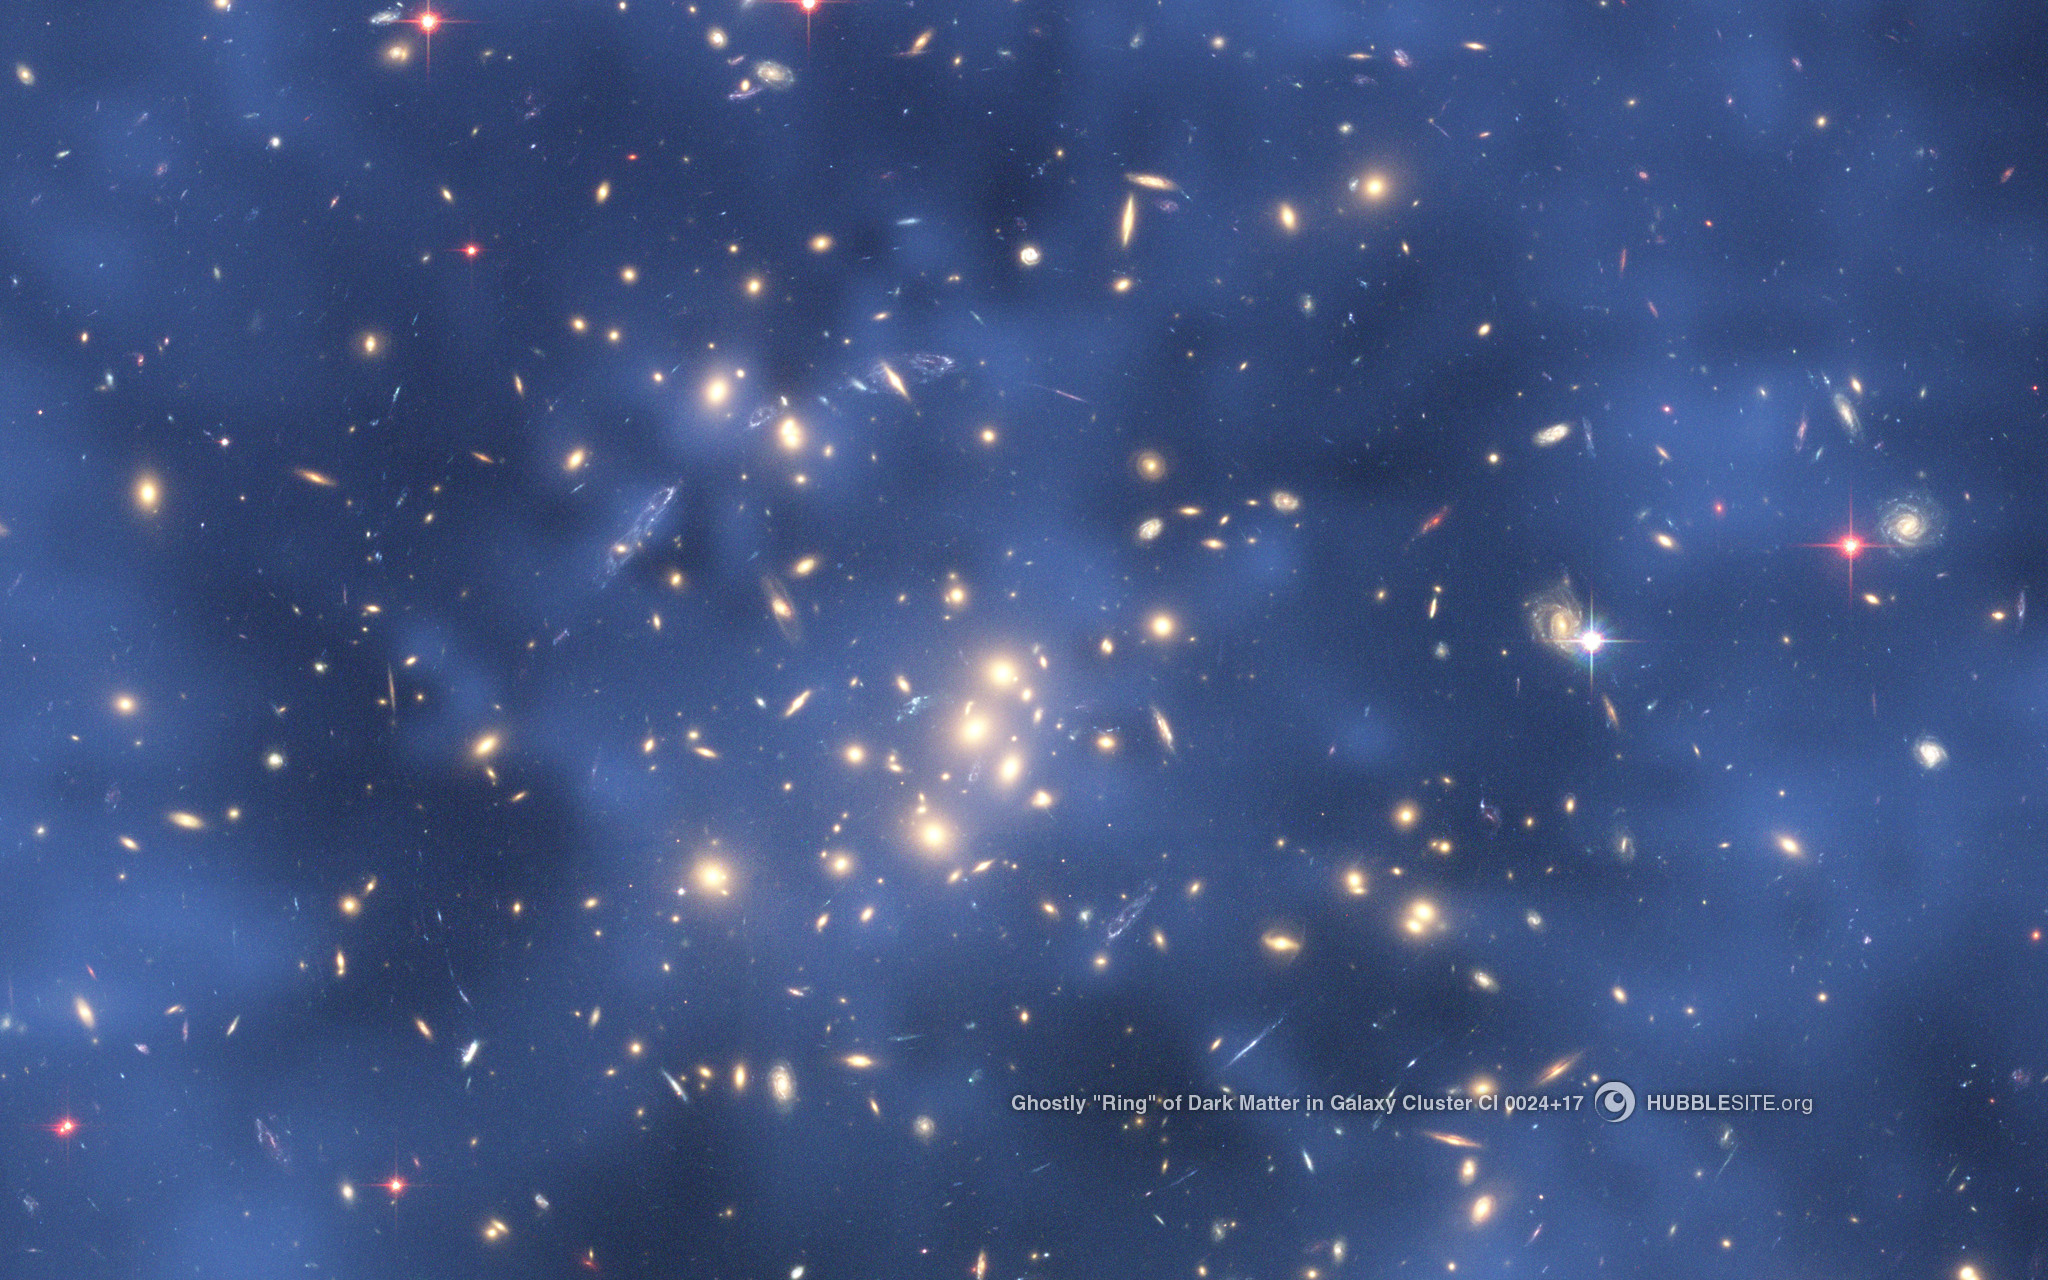 Ring of Dark Matter in Galaxy Cluster